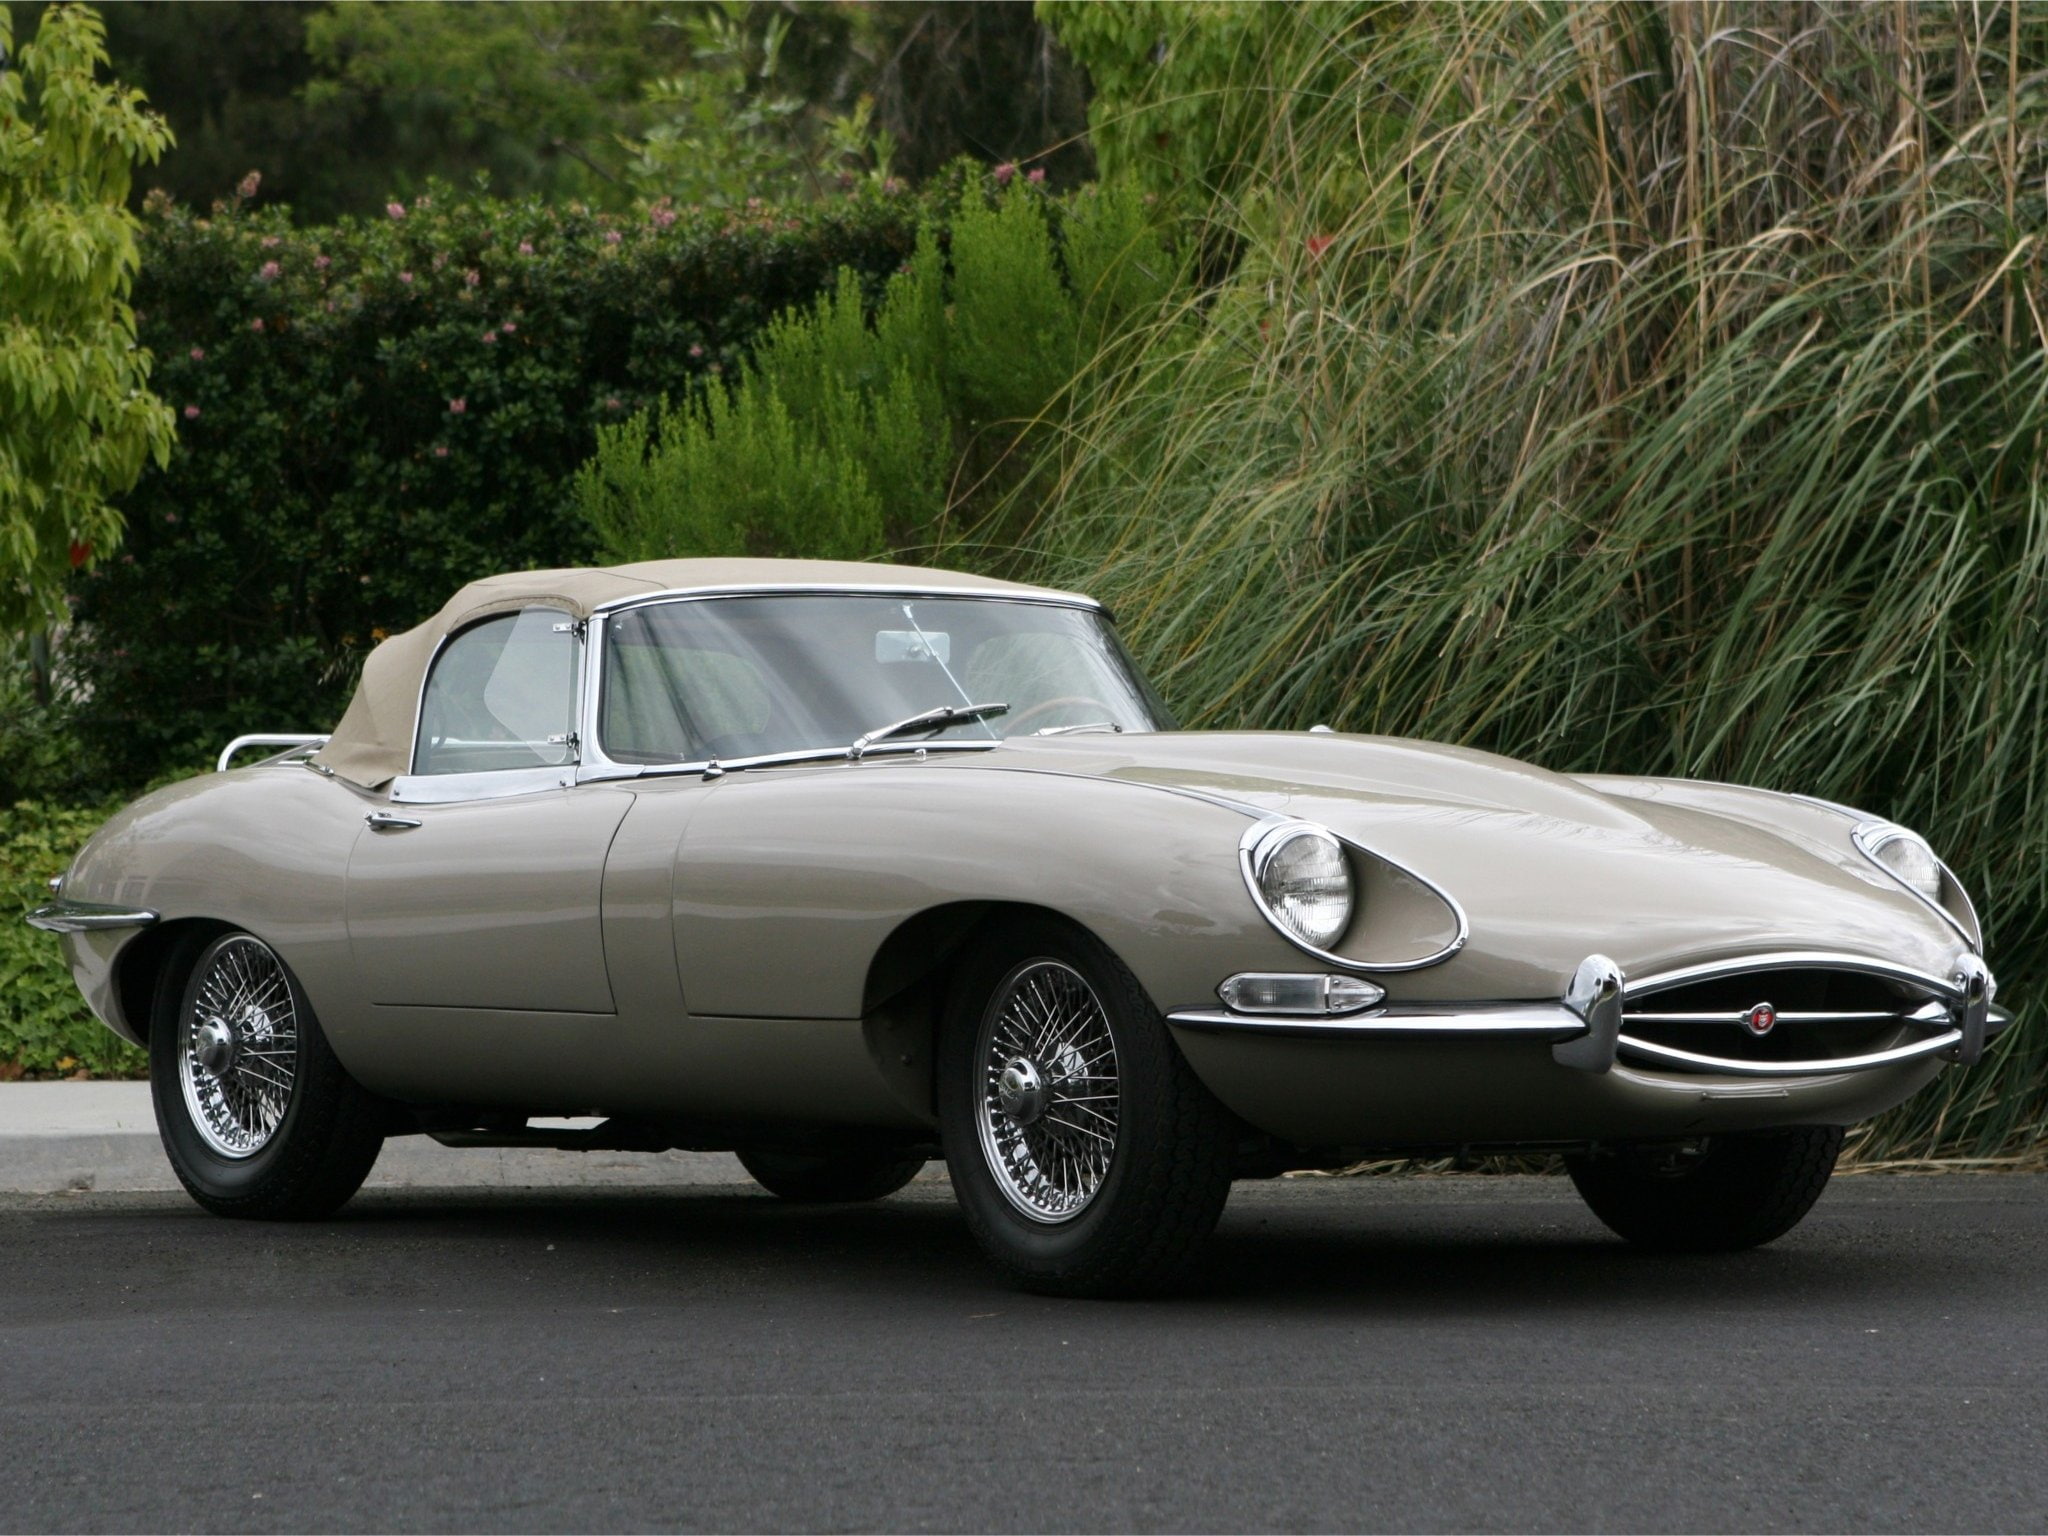 1967, cars, classic, e-type, jaguar, open, seater, two, vintage